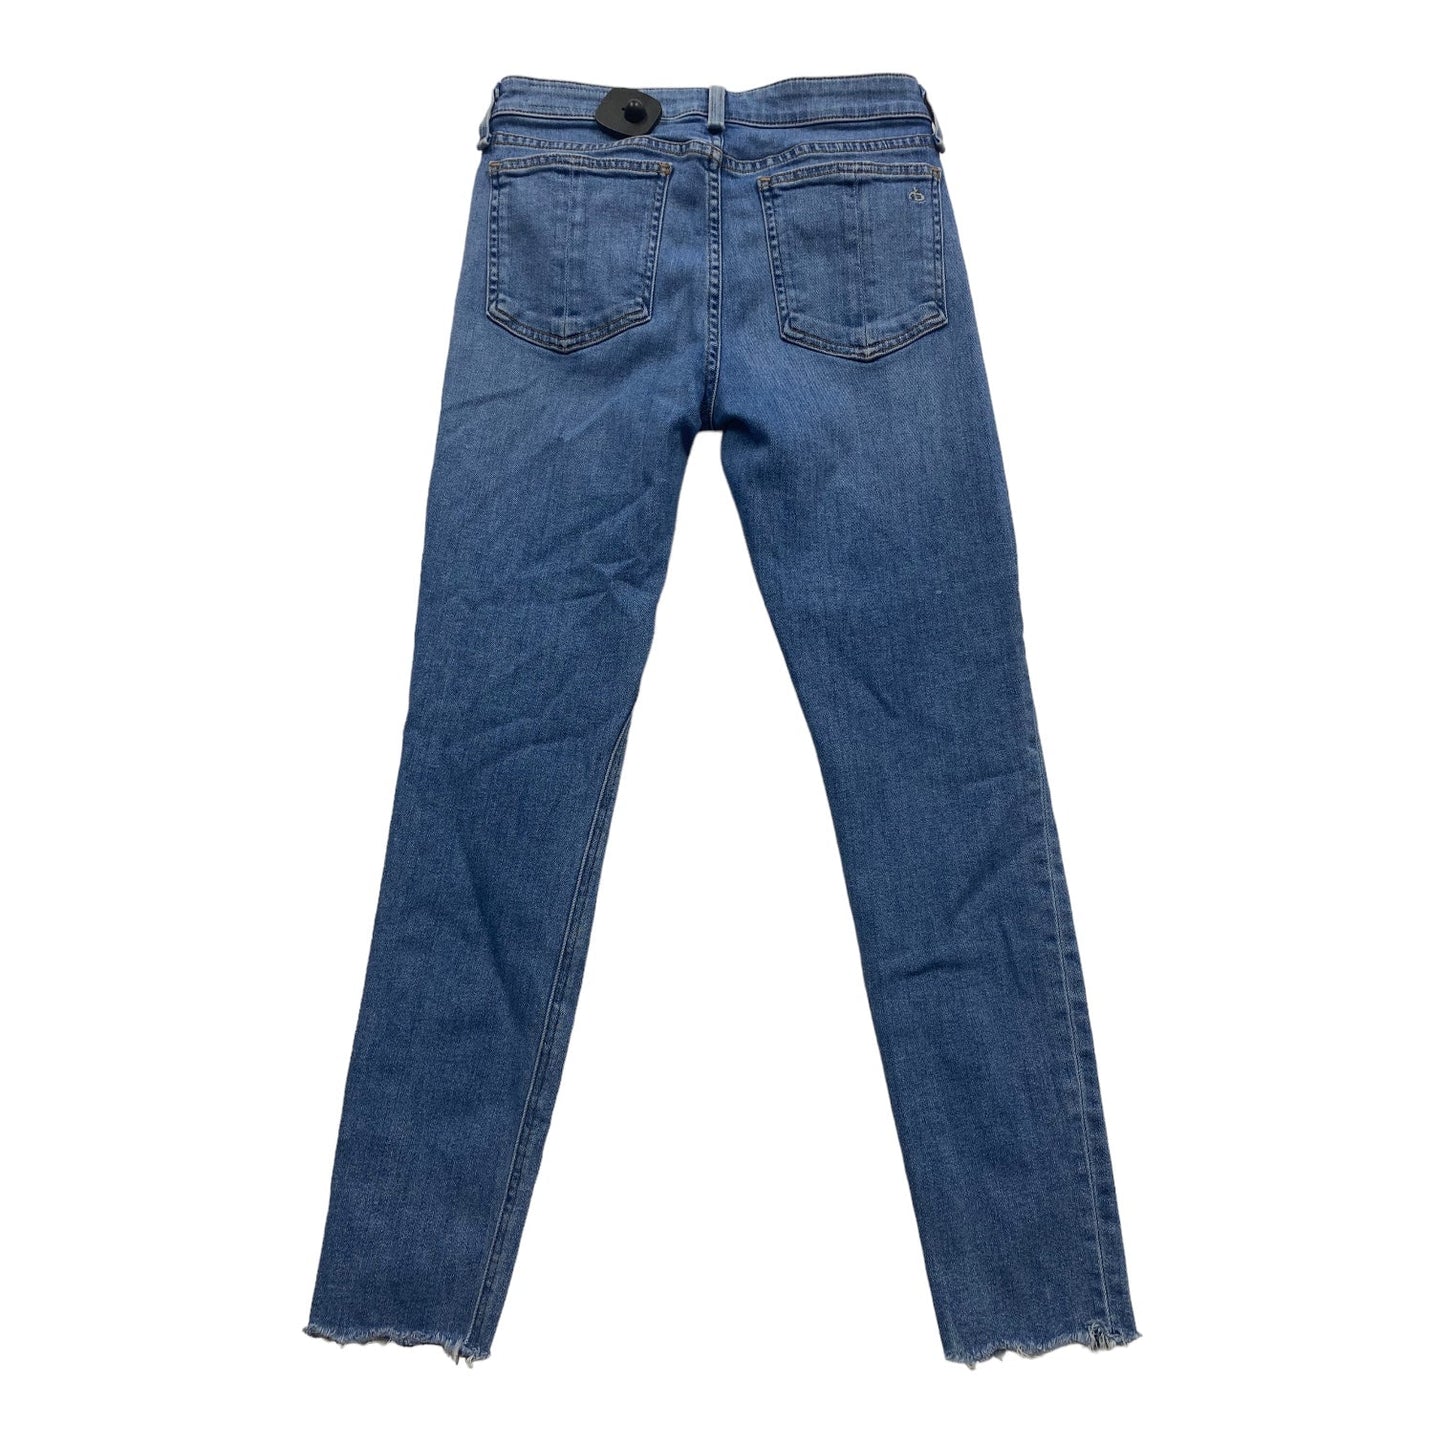 Blue Denim Jeans Skinny Rag & Bones Jeans, Size 4